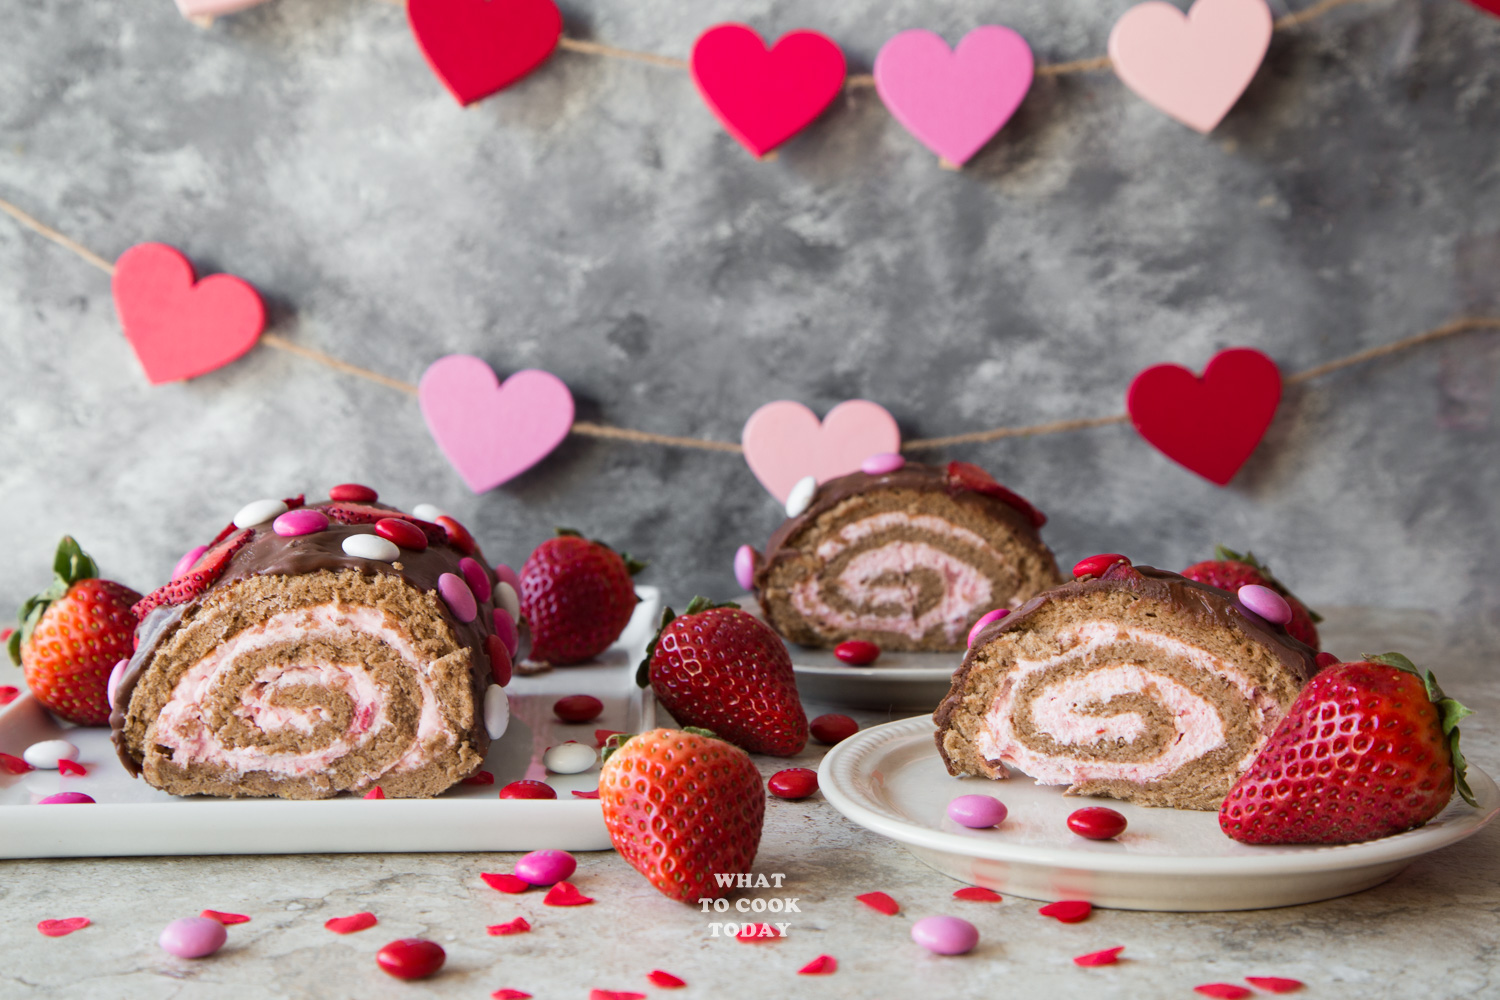 Strawberry Chocolate Swiss Roll #ad #sendsweetness #valentinesdaygift